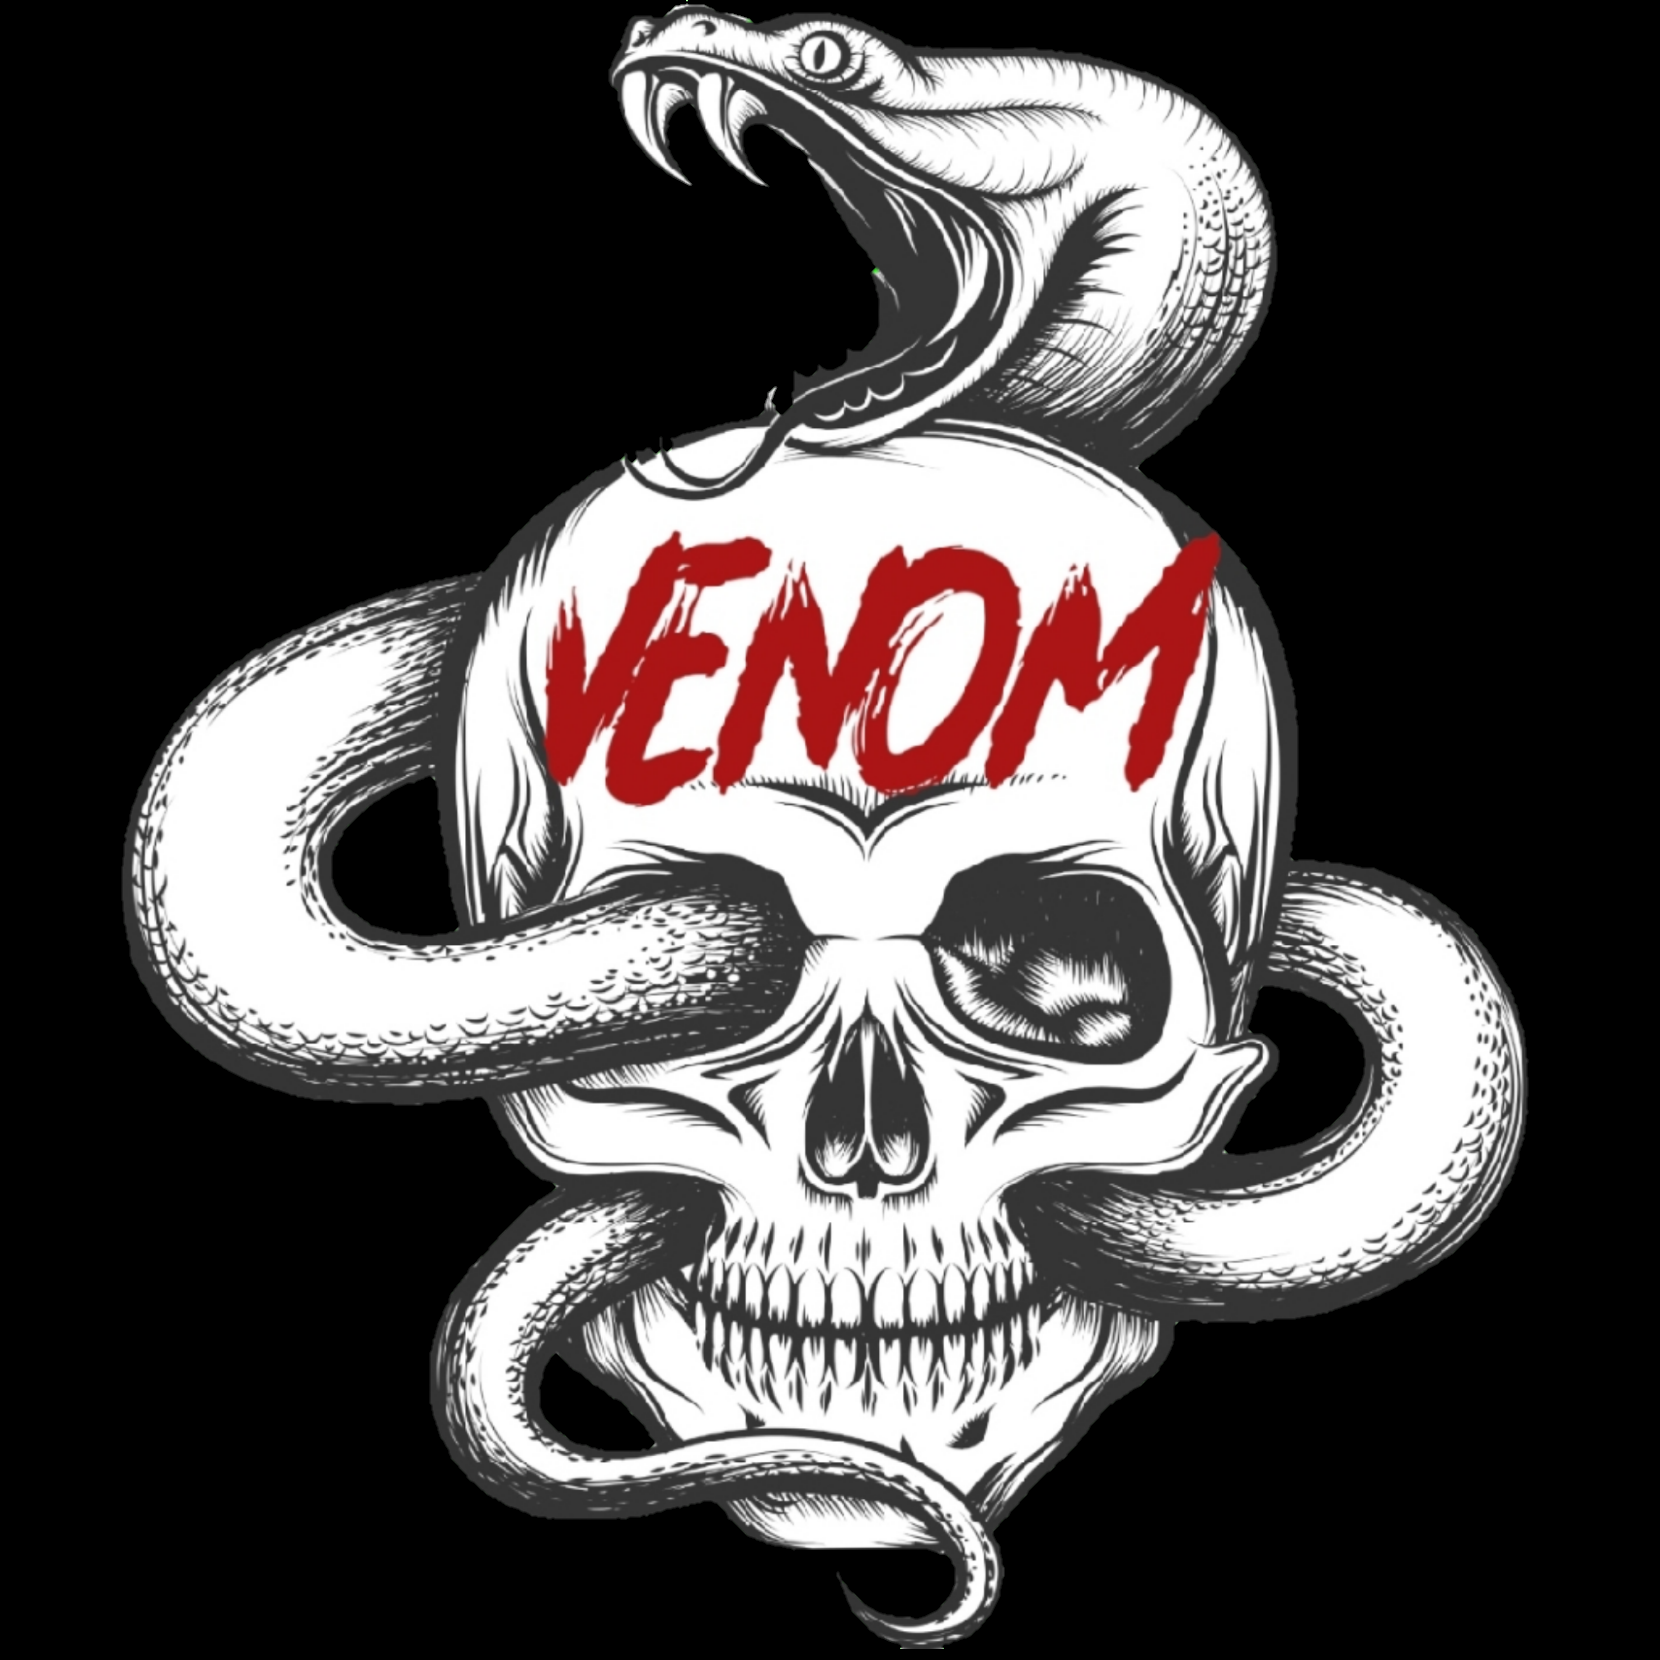 Venom12784